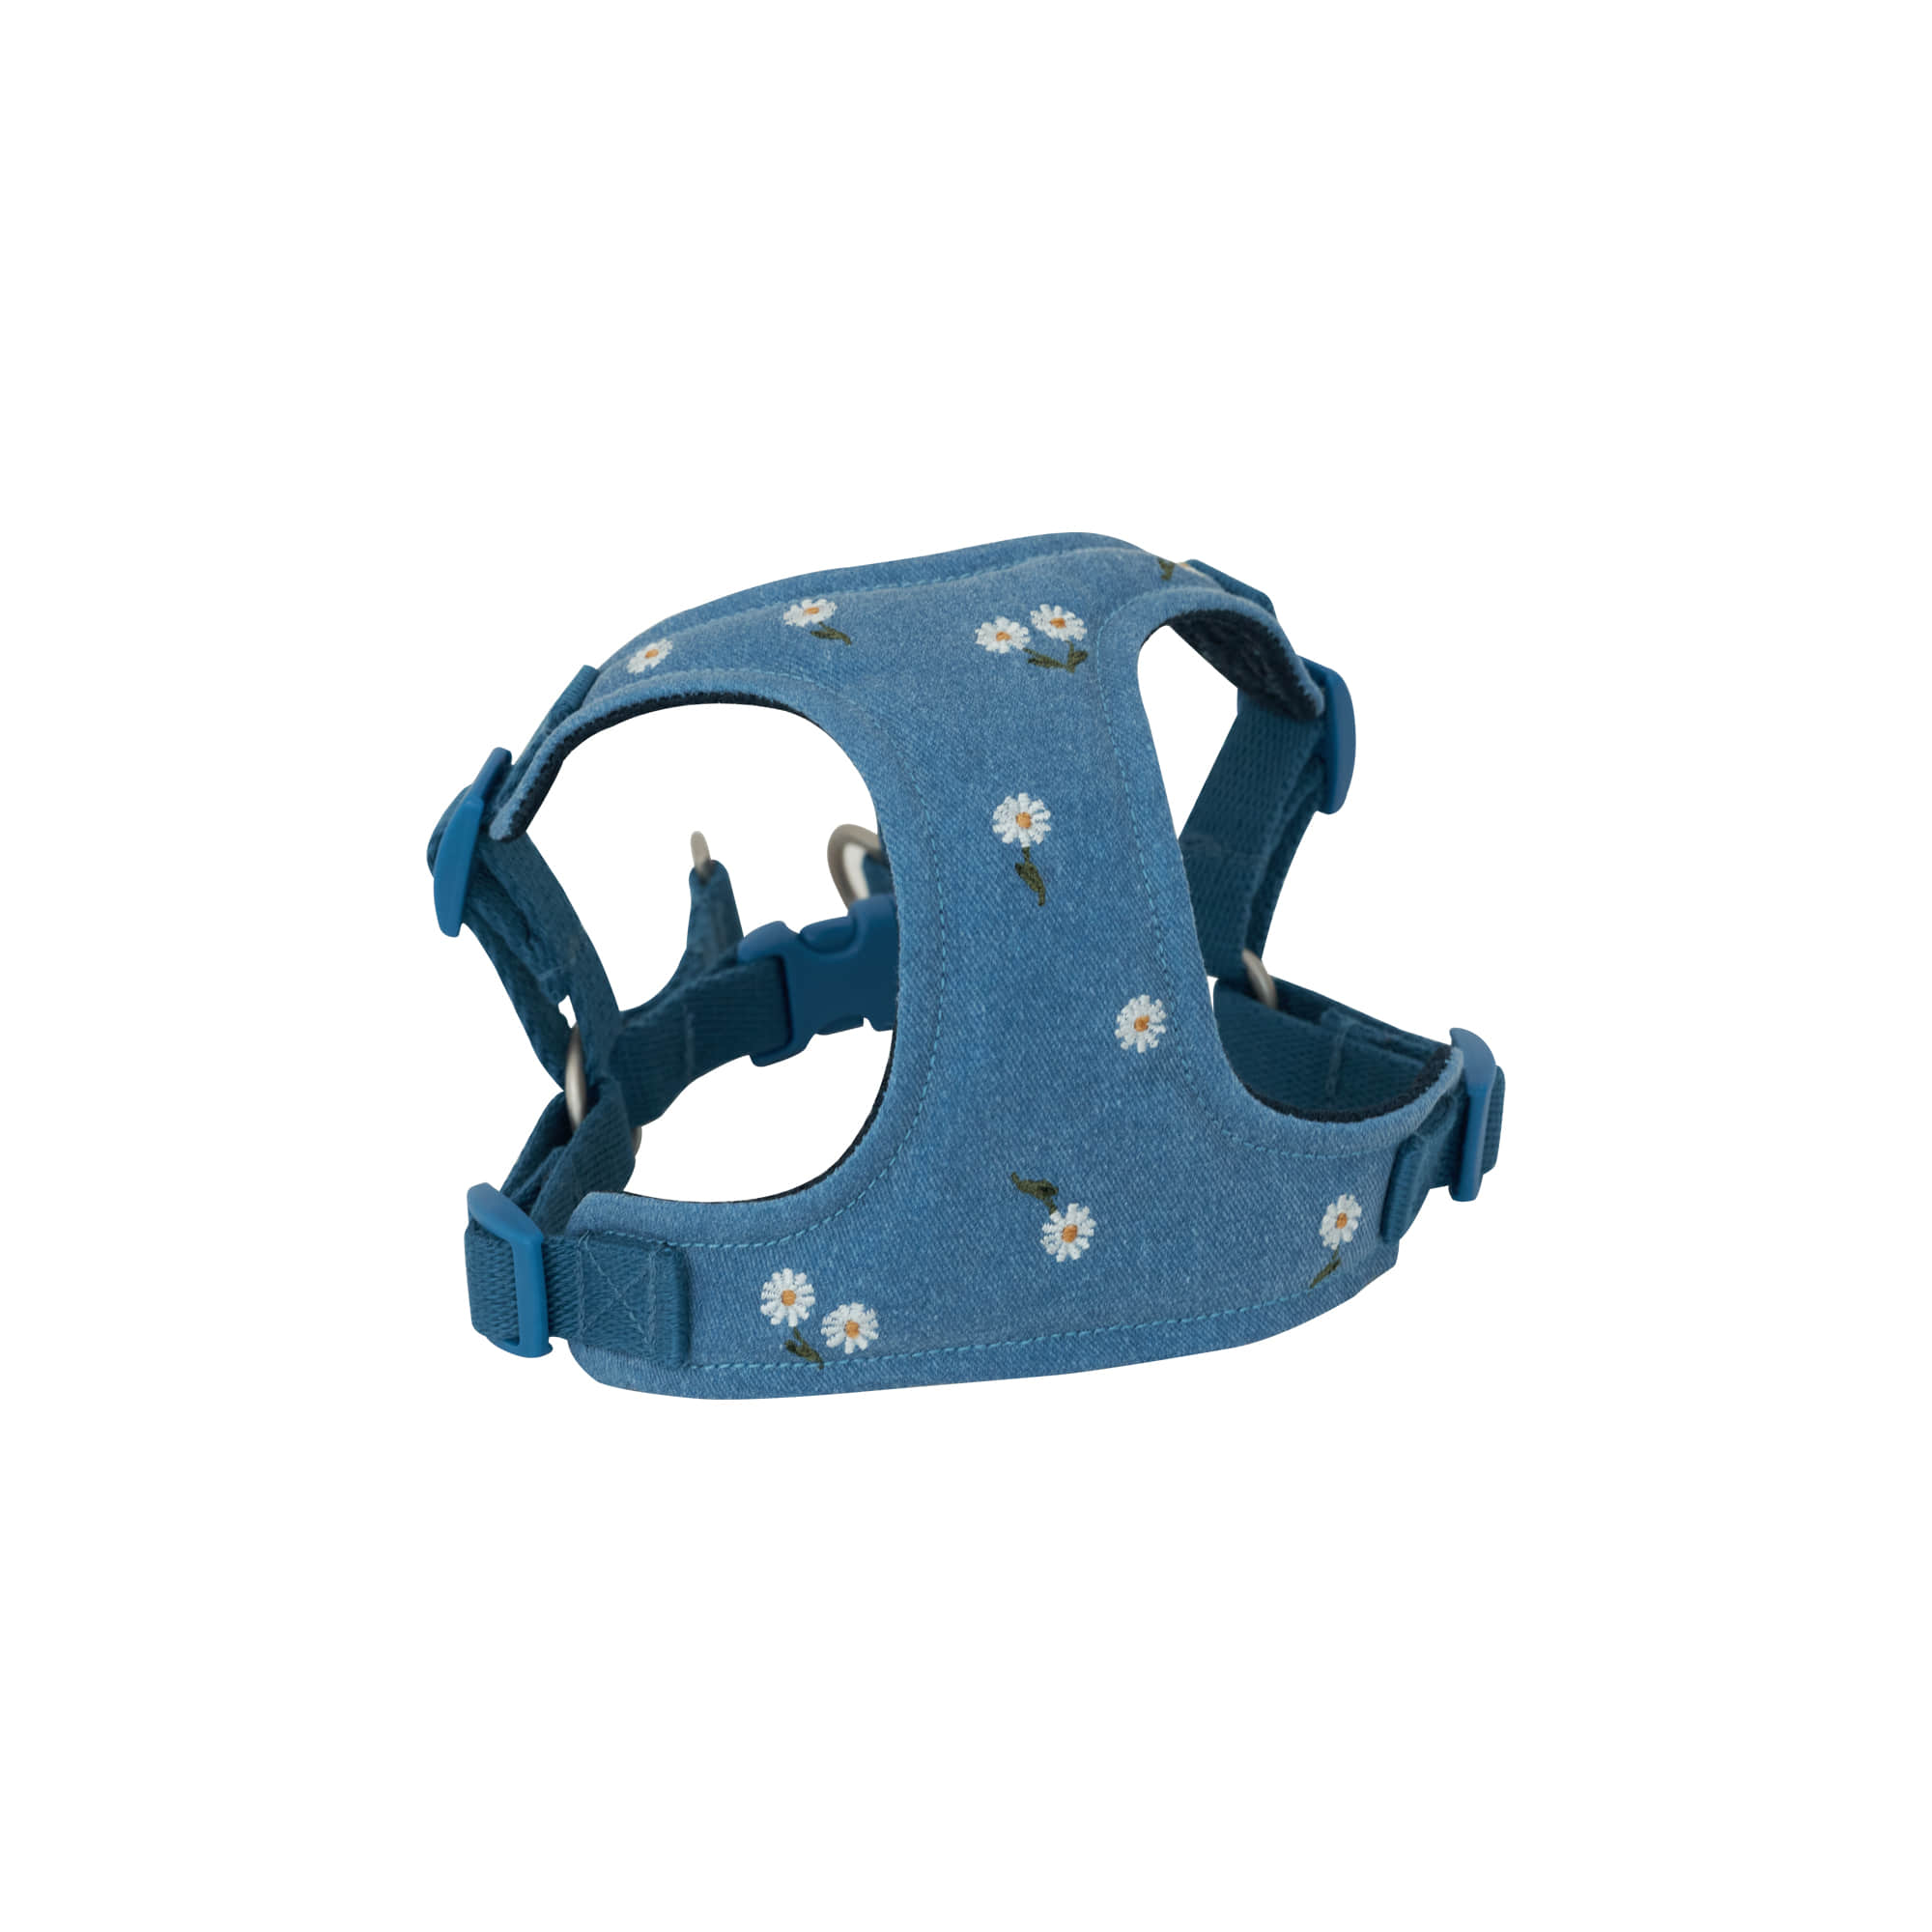 Daisy flower X type harness (Blue)